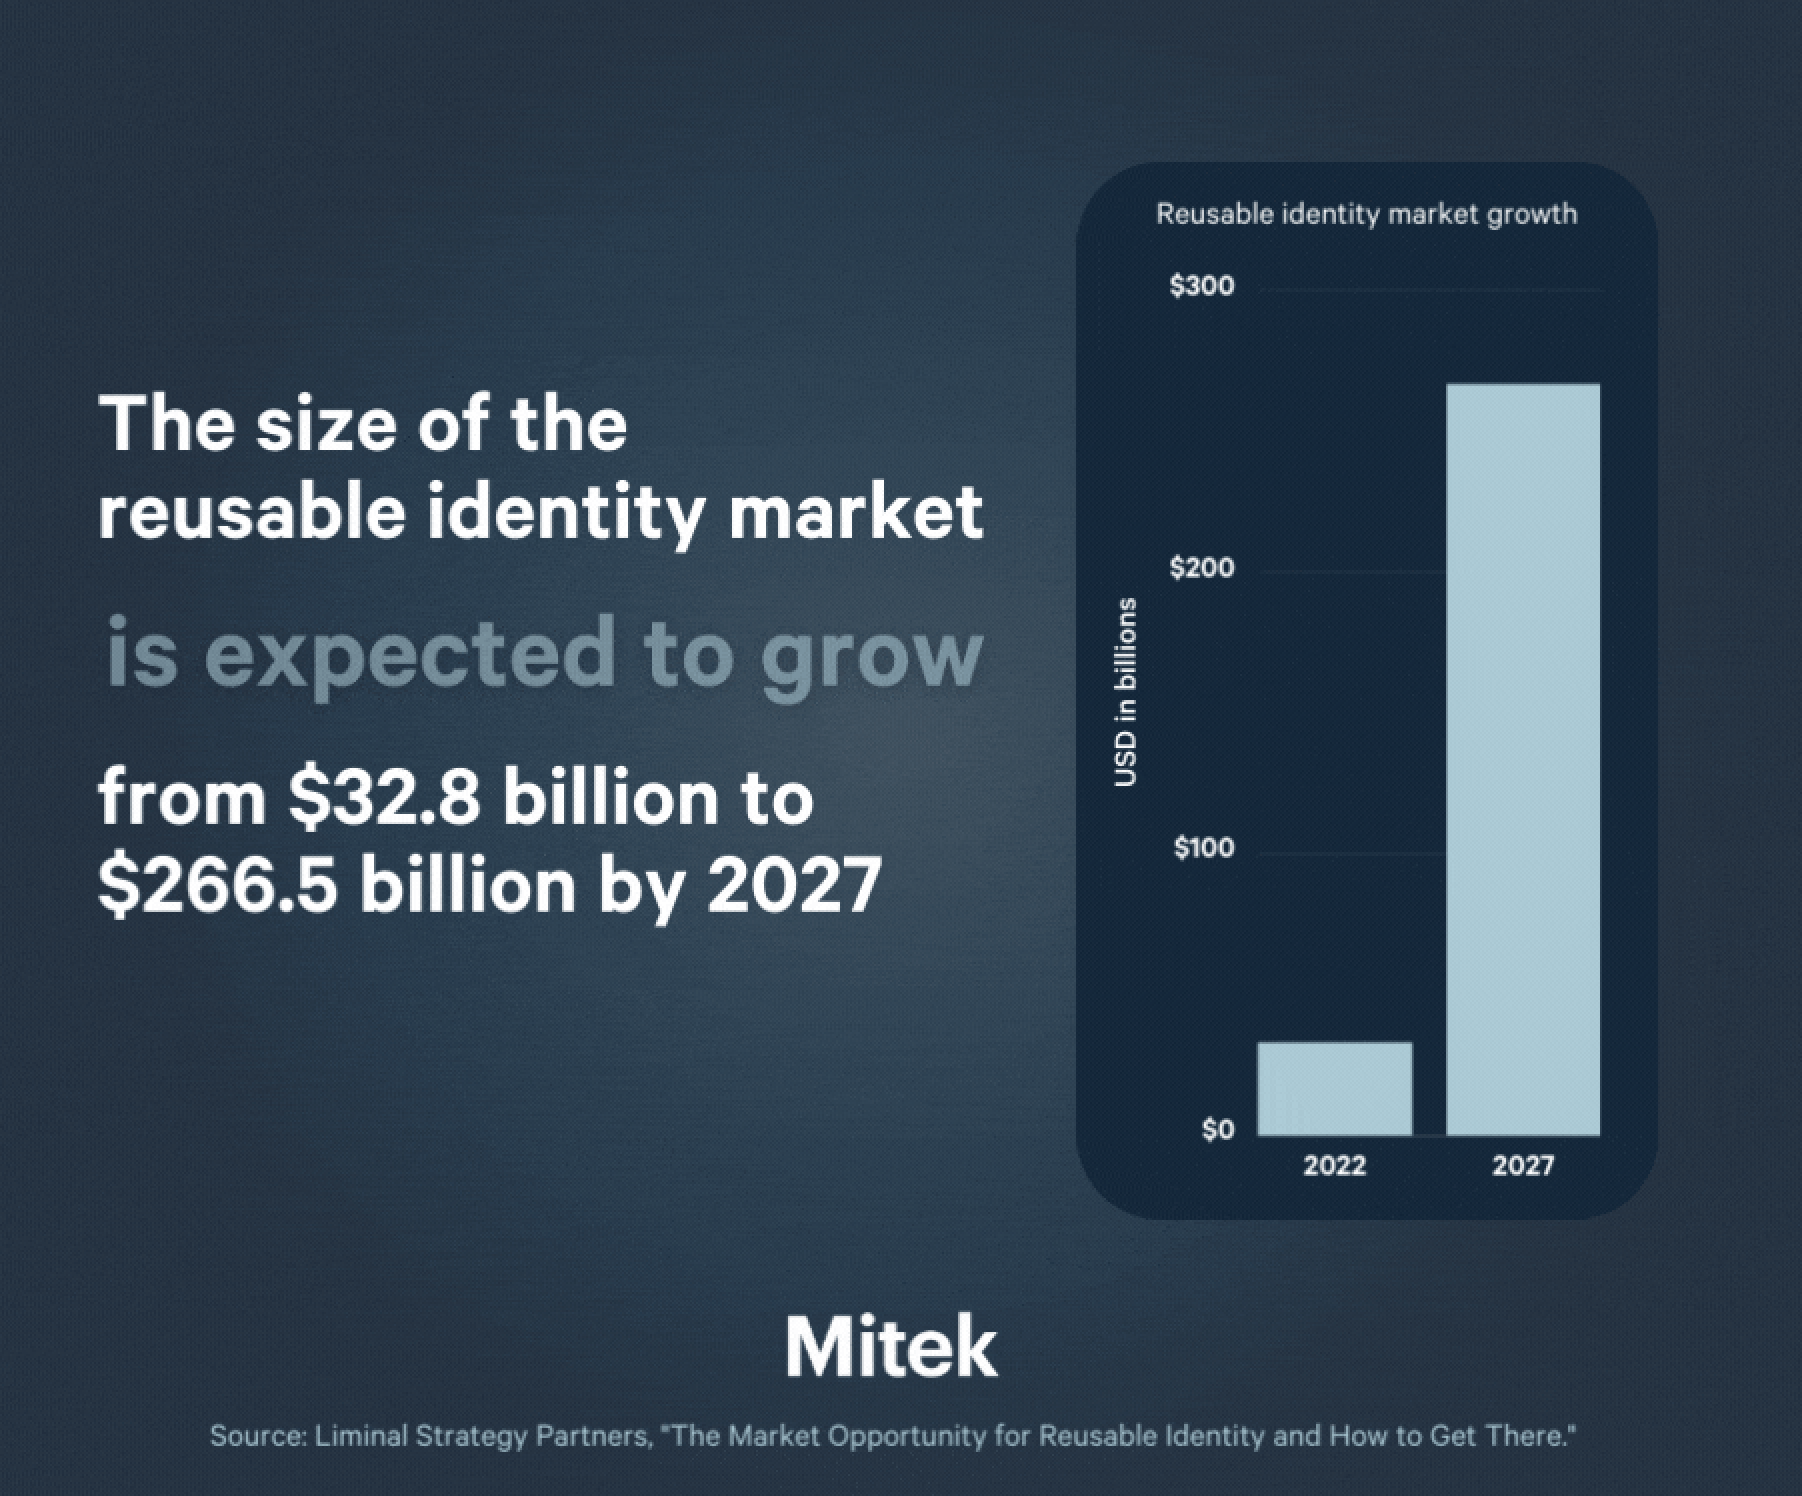 Reusable identity market growth